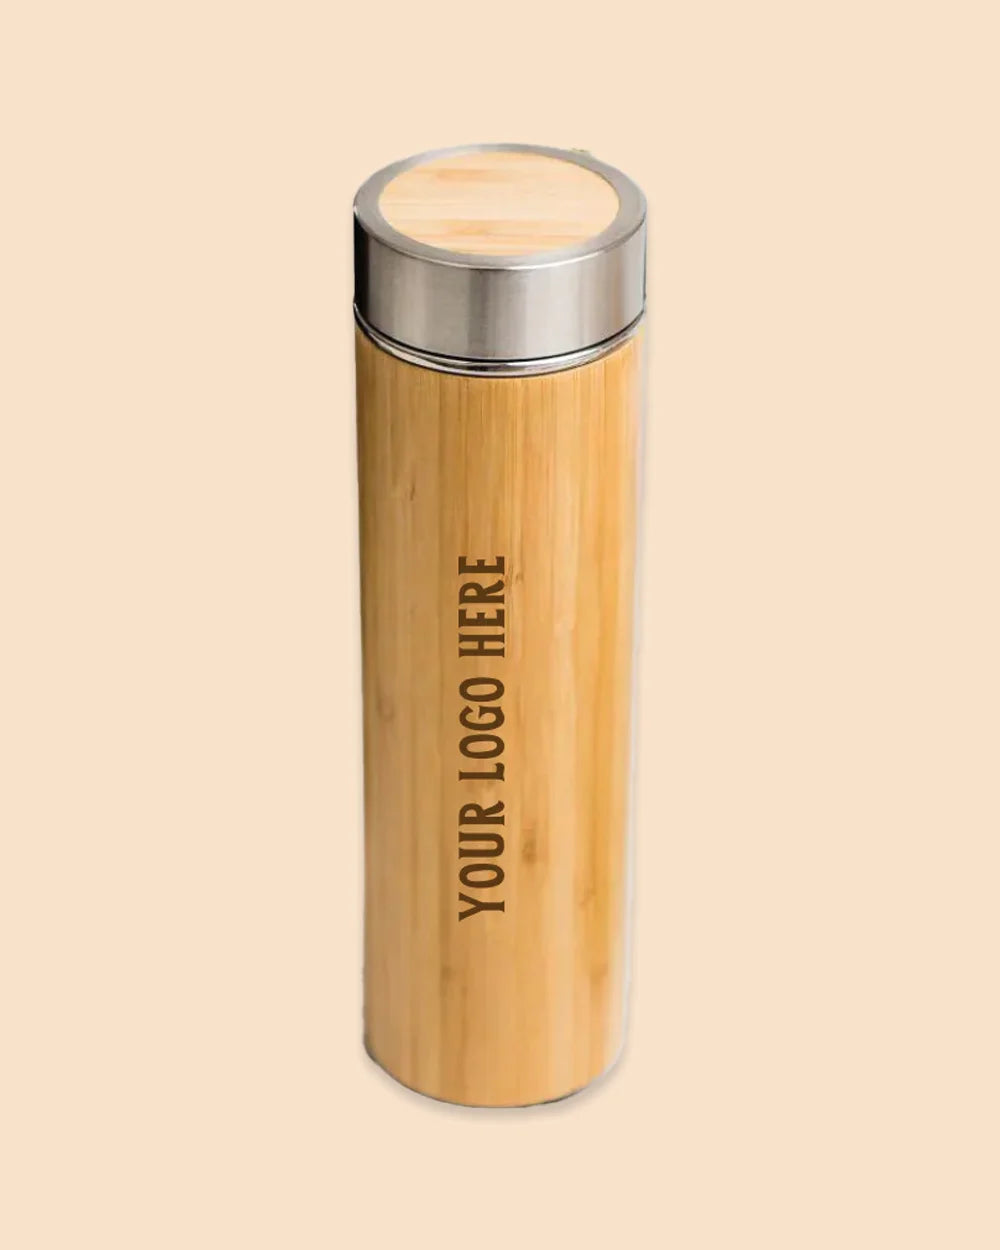 Bamboo Flask